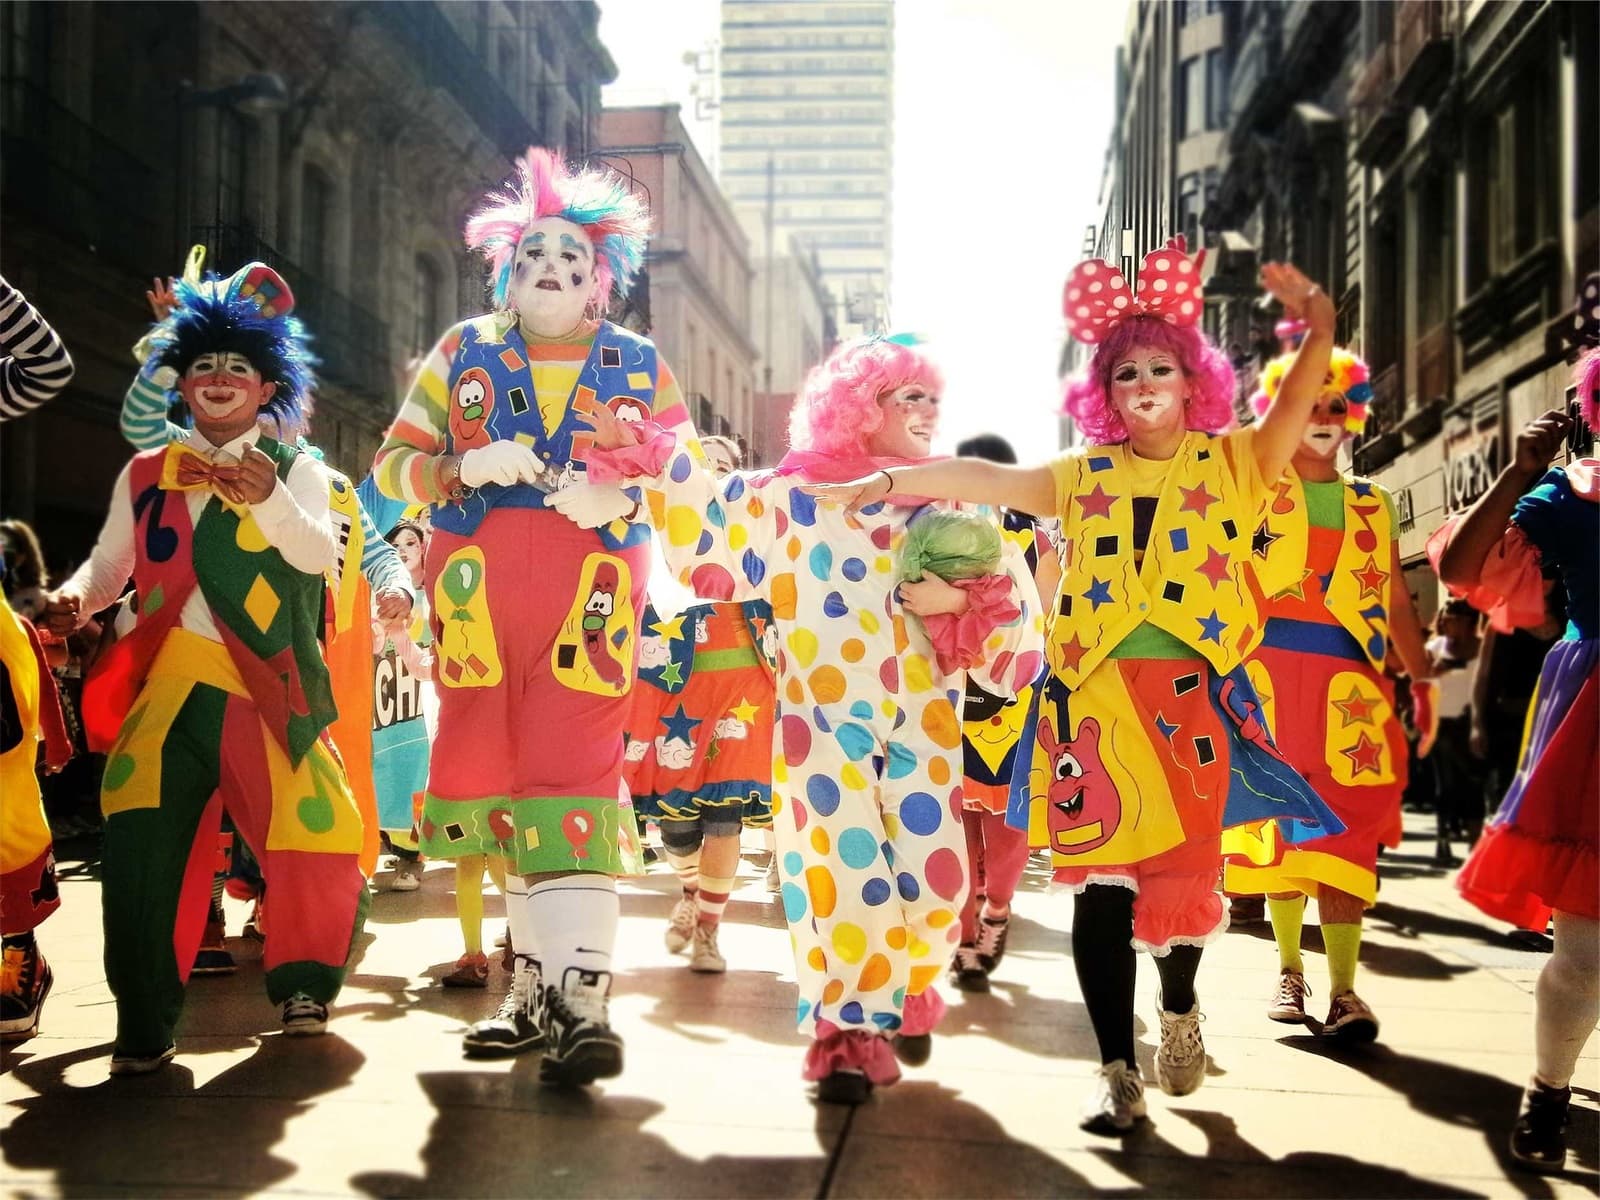 International Clown Festival set to take place in Chennai